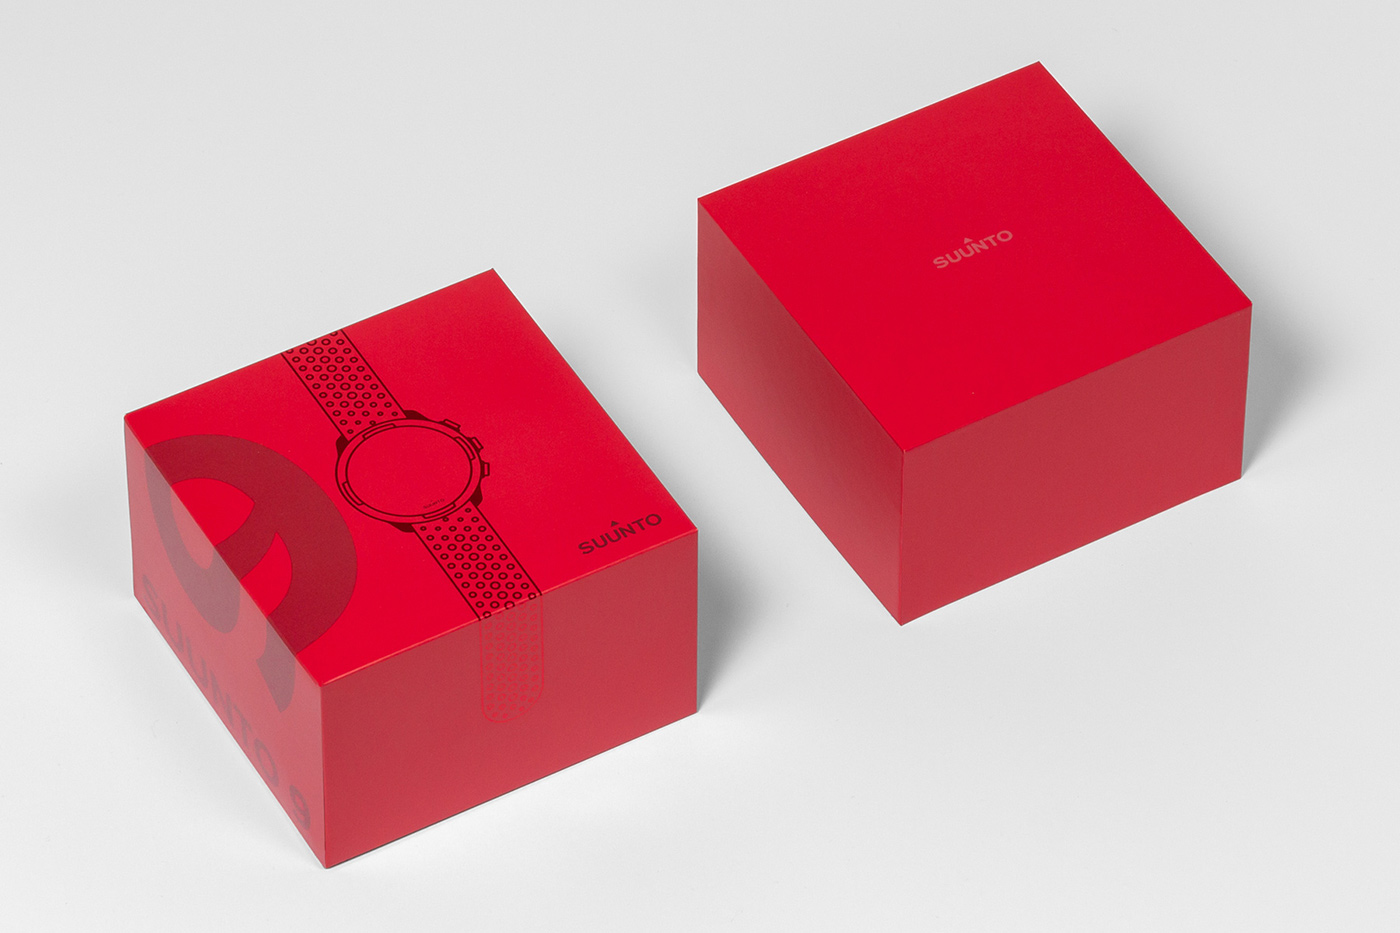 Suunto gift box packaging design